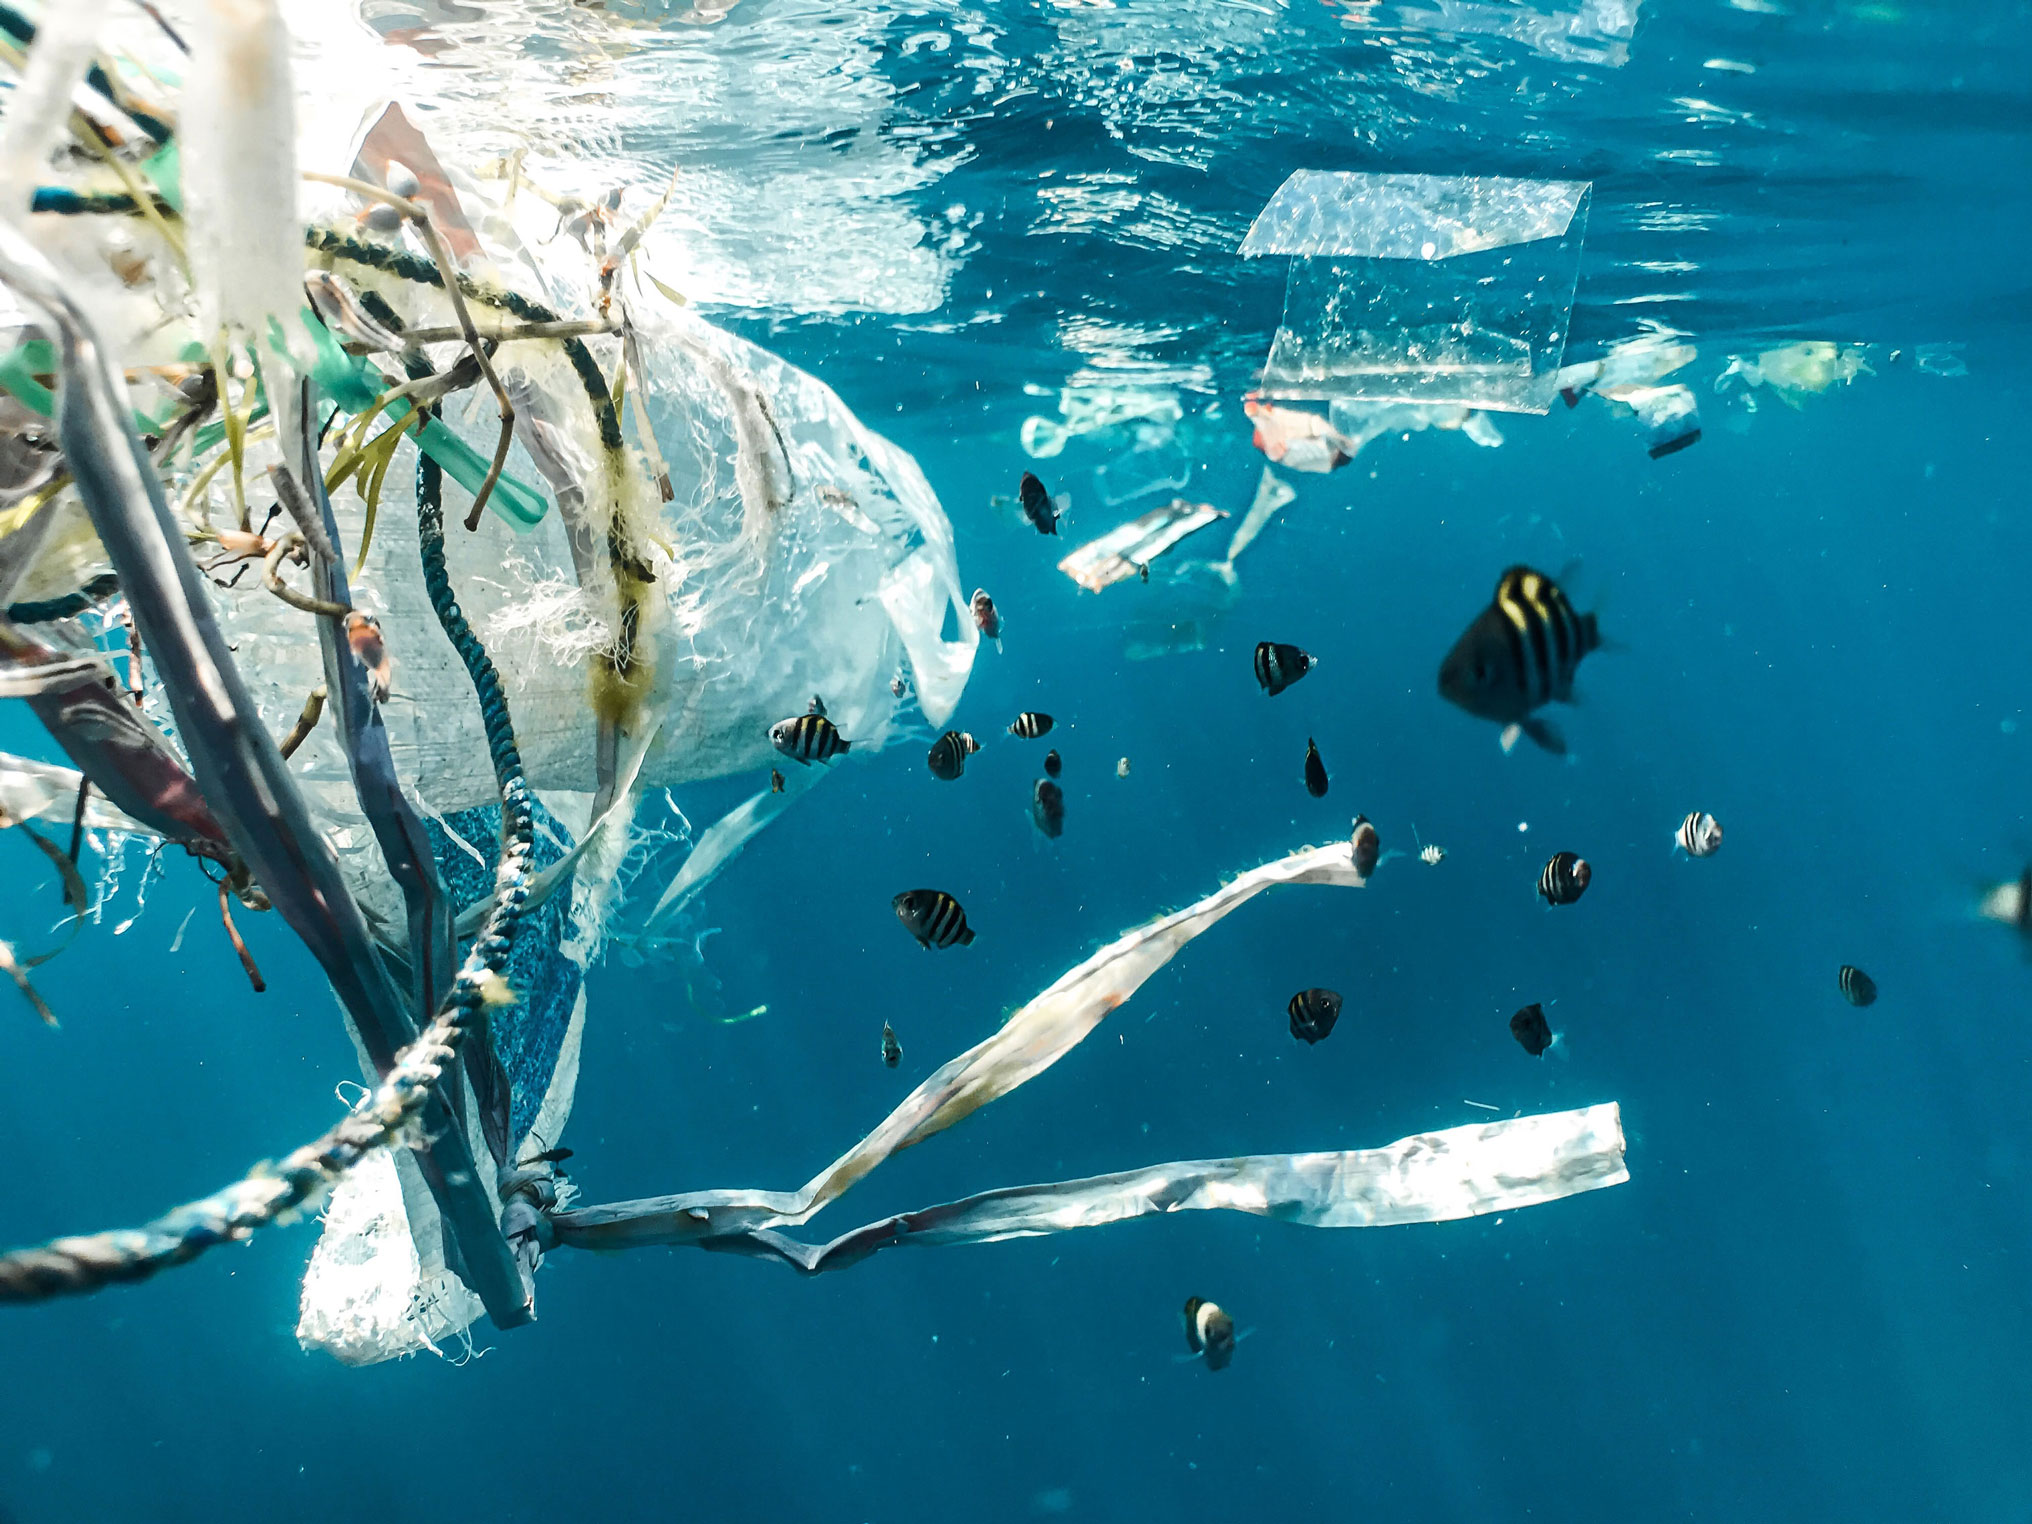 FRANCE : South region's commitment to zero plastic